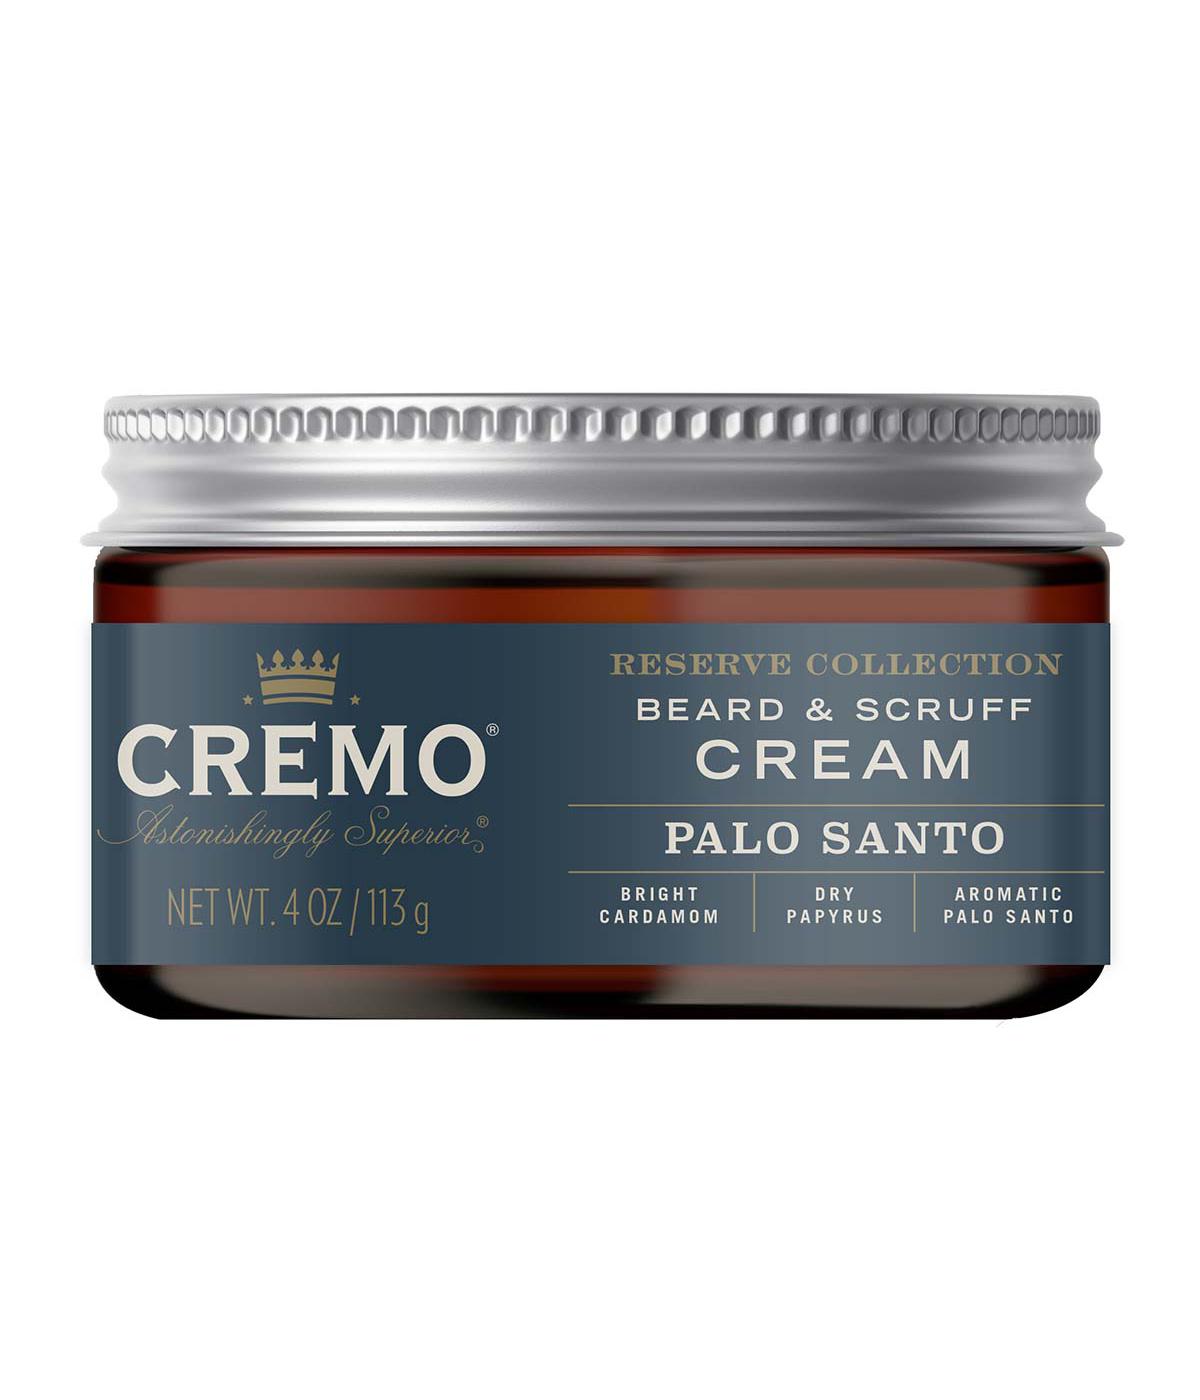 Cremo Reserve Collection Beard & Scruff Cream - Palo Santo; image 3 of 3